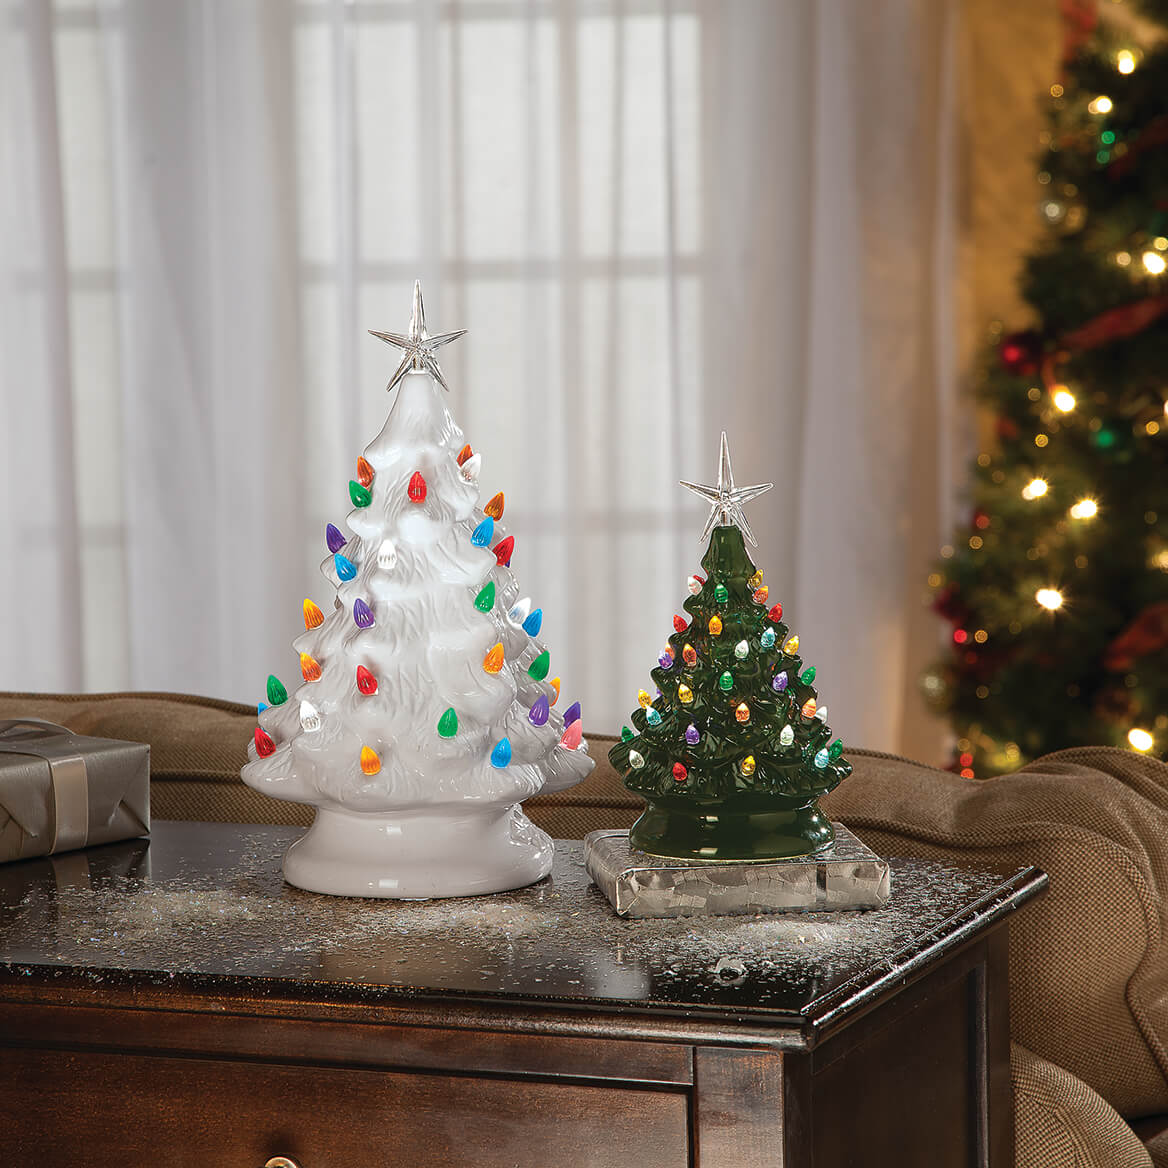 HOLIDAY PEAK Battery-Operated Vintage-Style Ceramic Christmas Tree,  Nostalgic Holiday Décor, White, 13 High